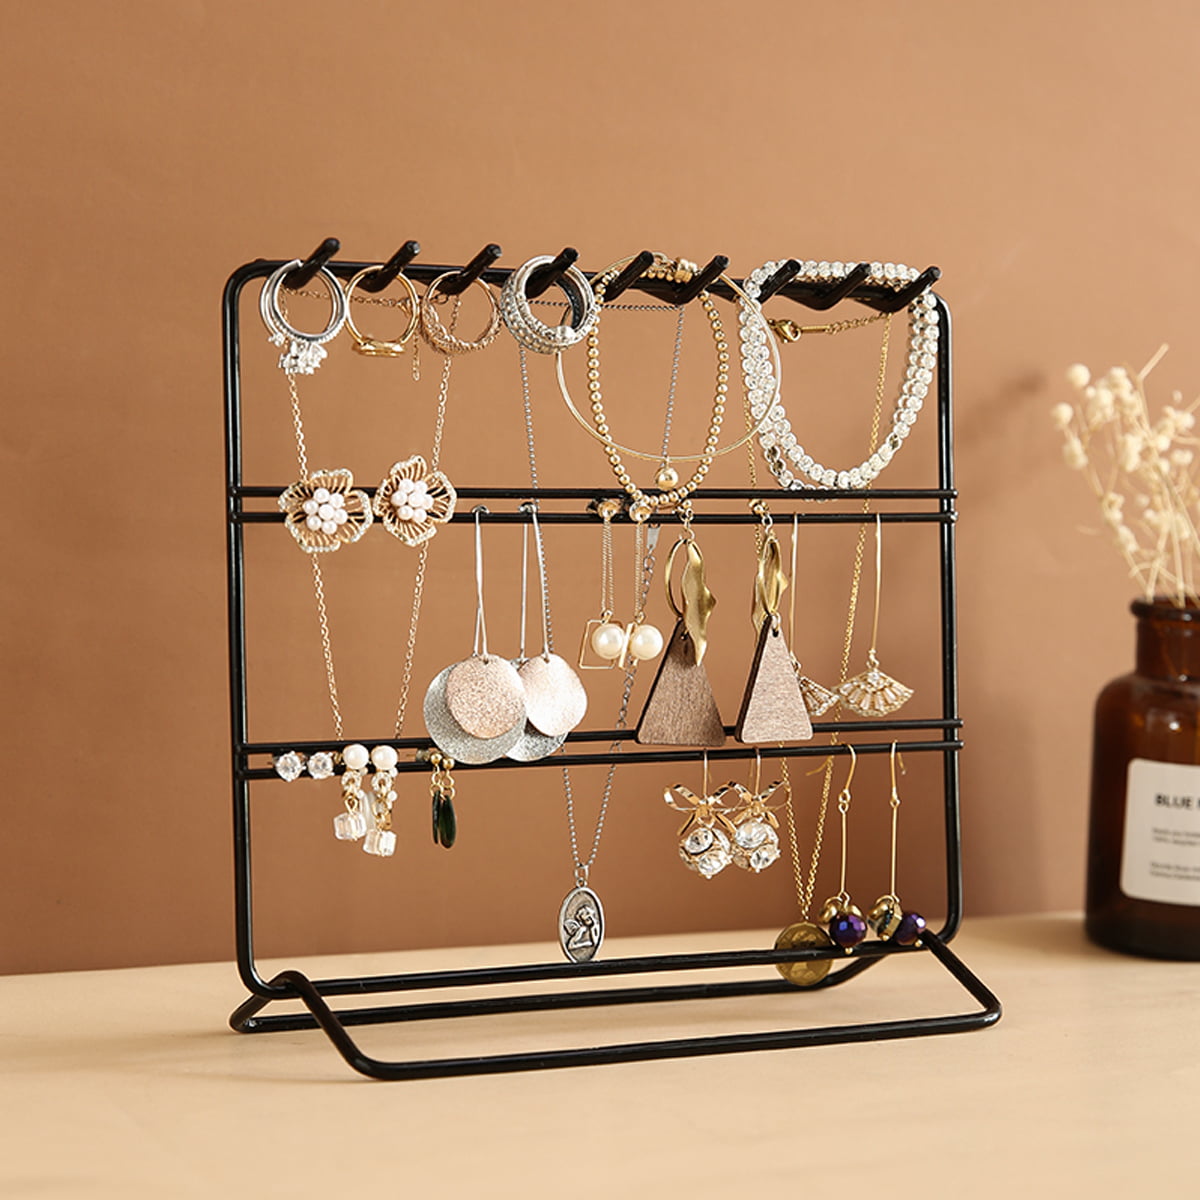 Jewelry storage hanging organizer